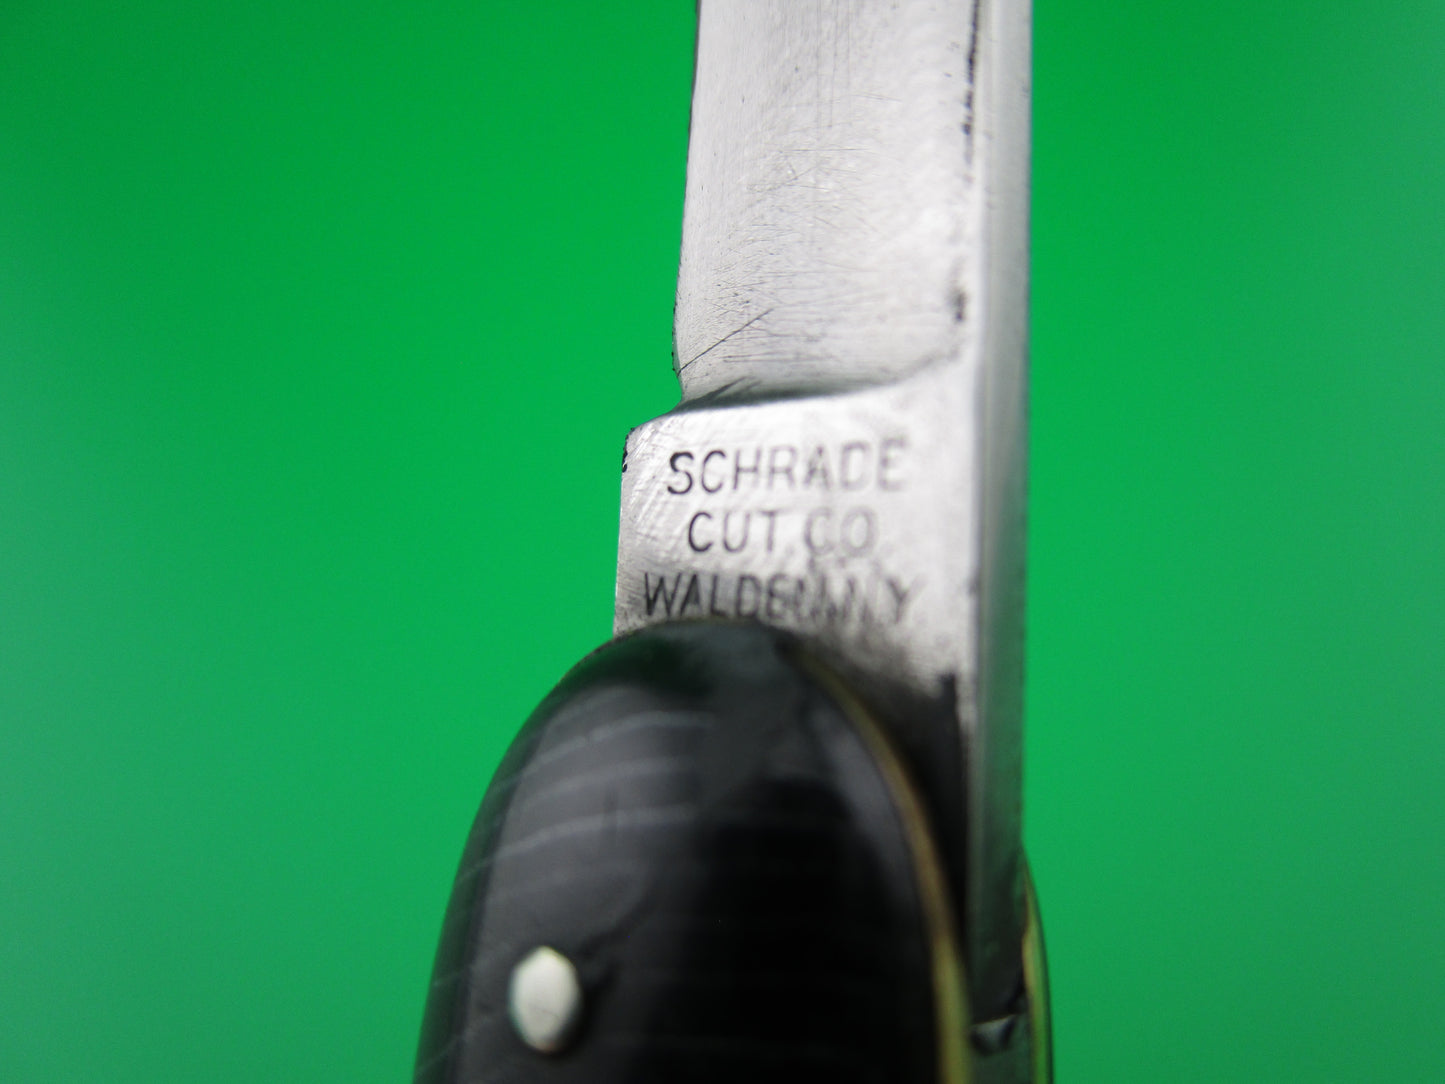 Schrade Cut Co medium double Black waterfall celluloid switchblade knife